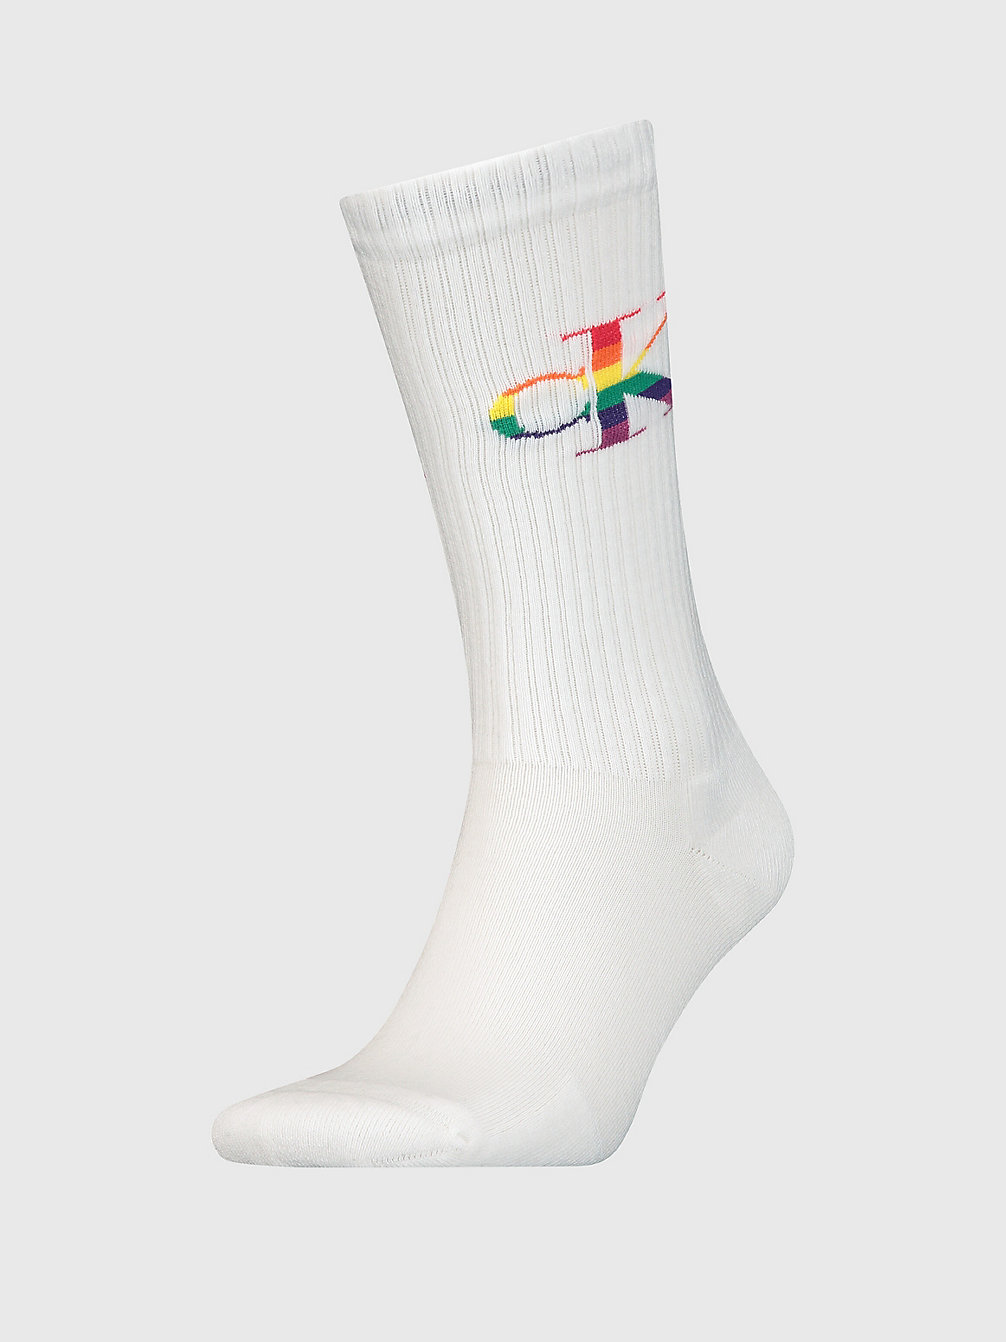 WHITE Crew Socks - Pride undefined men Calvin Klein